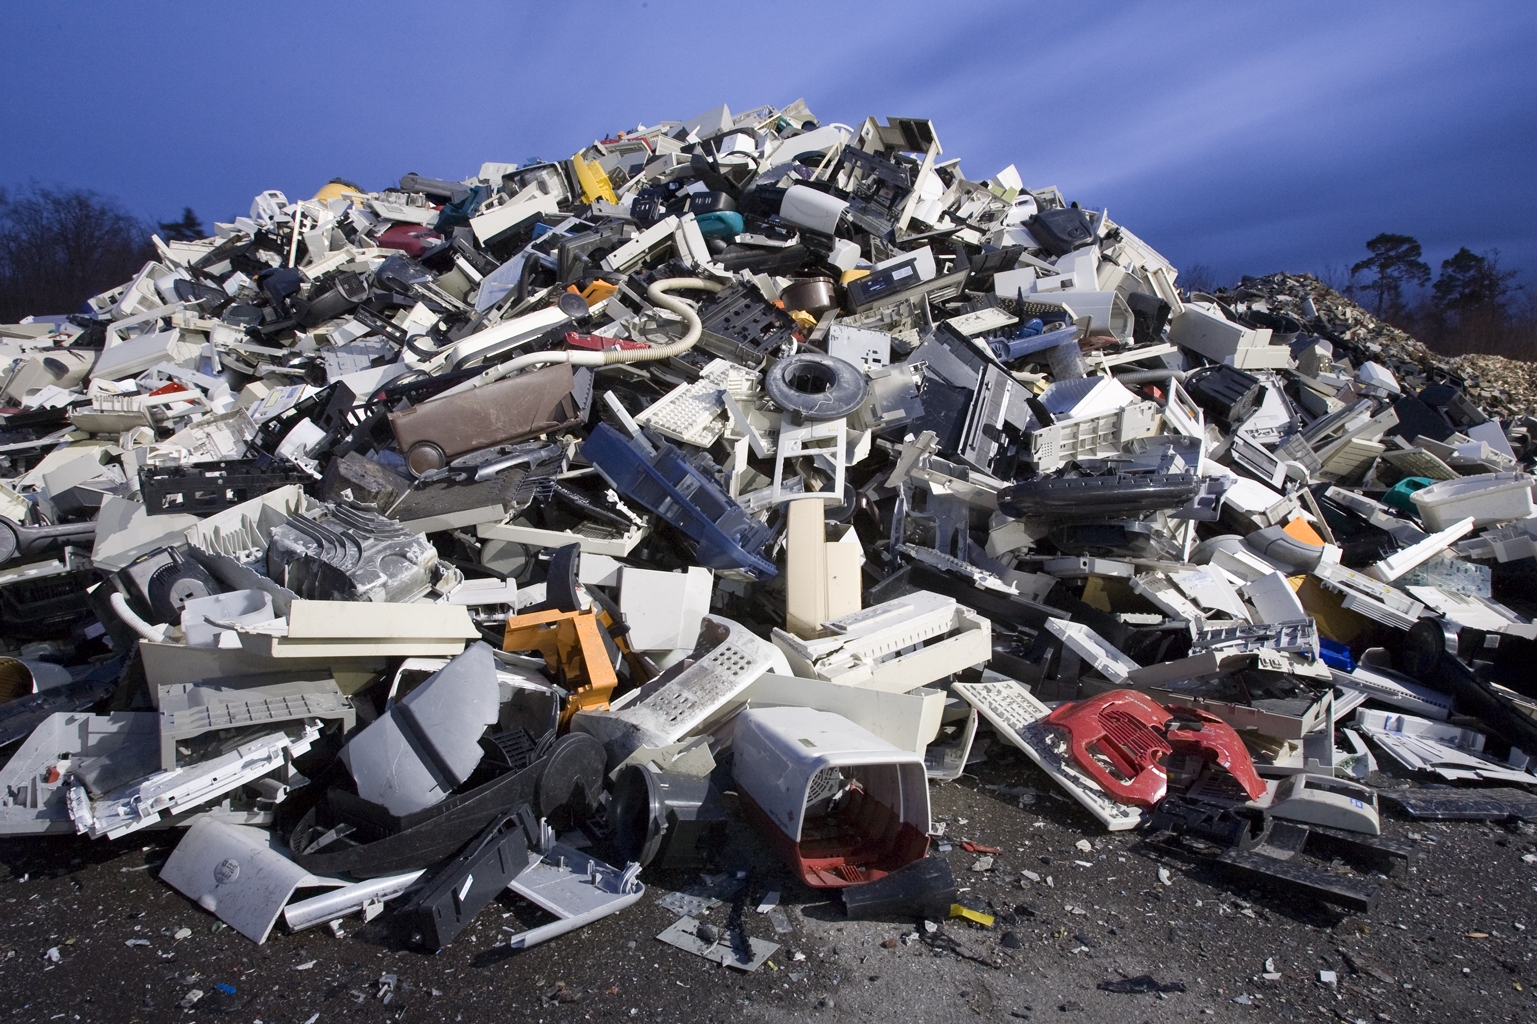 More information about "Ανακύκλωση ηλεκτρονικών αποβλήτων: μια πηγή δισεκατομμυρίων Ευρώ στην ΕΕ"